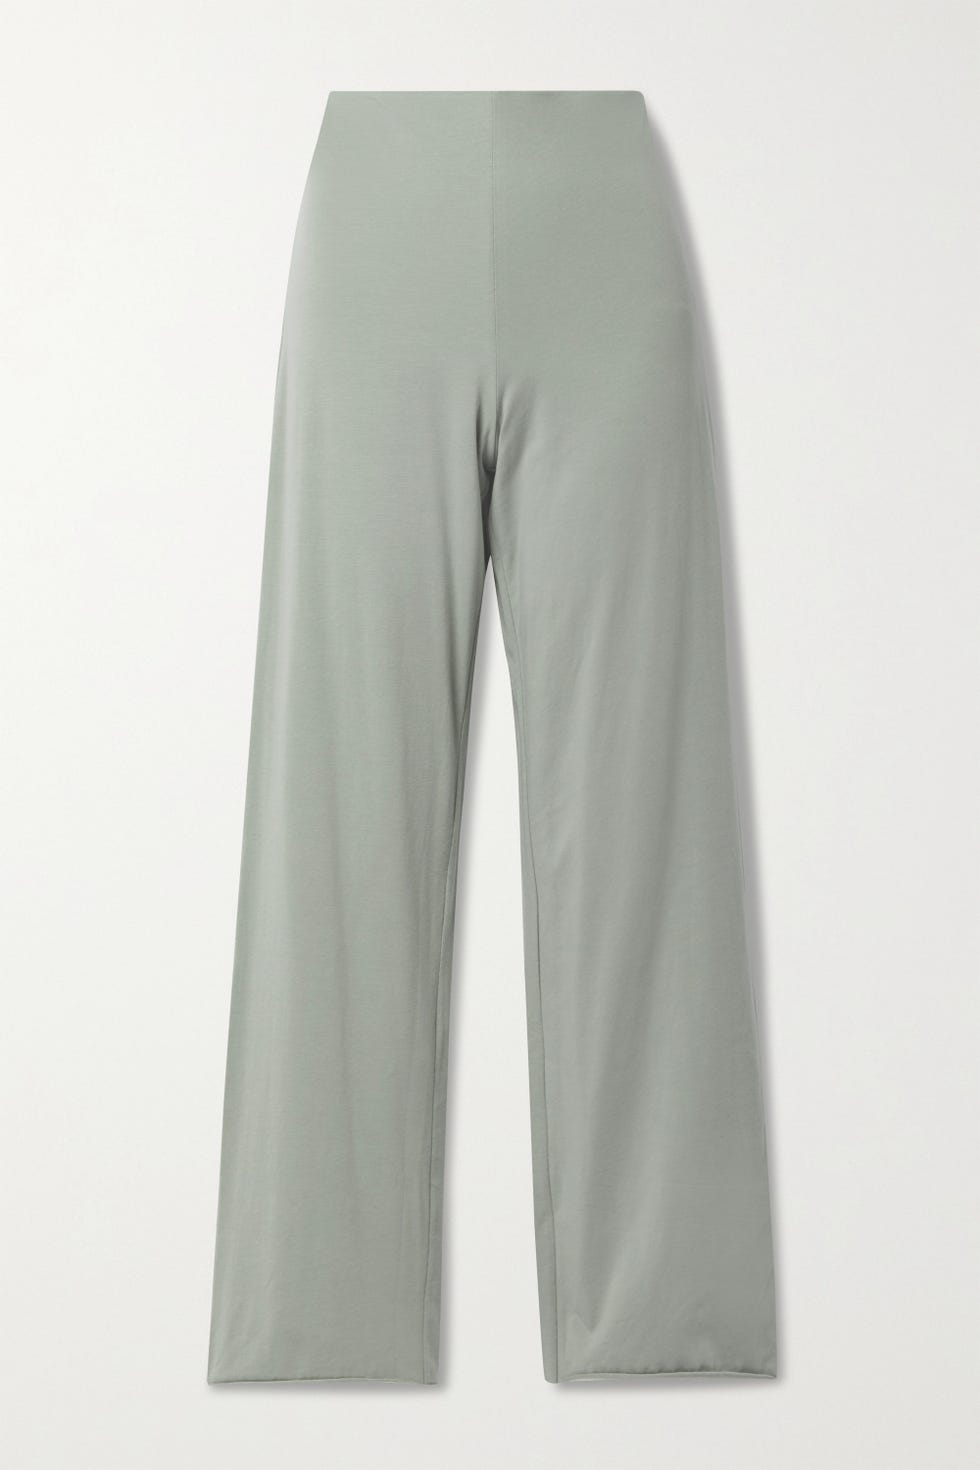 + NET SUSTAIN Athena reversible organic Pima cotton-blend jersey pajama pants